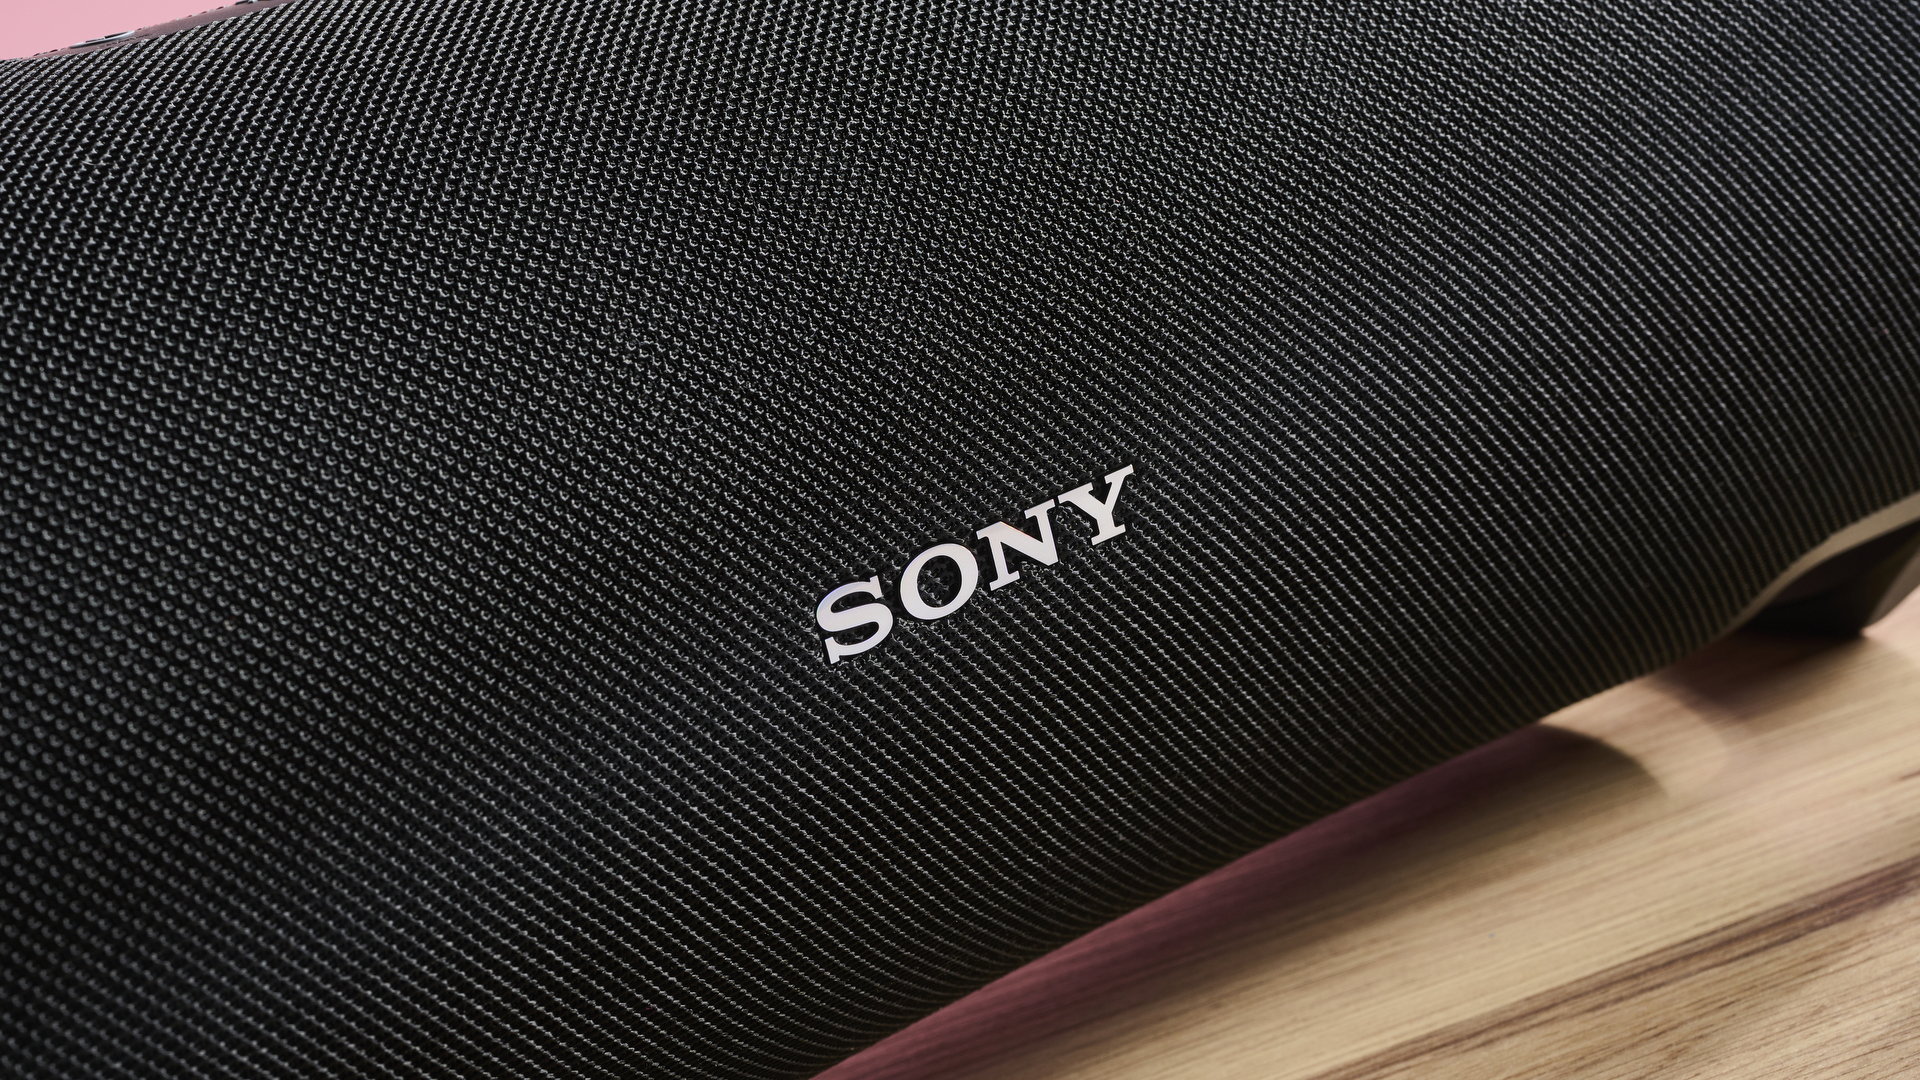 Sony ULT Field 7 speaker logo close-up